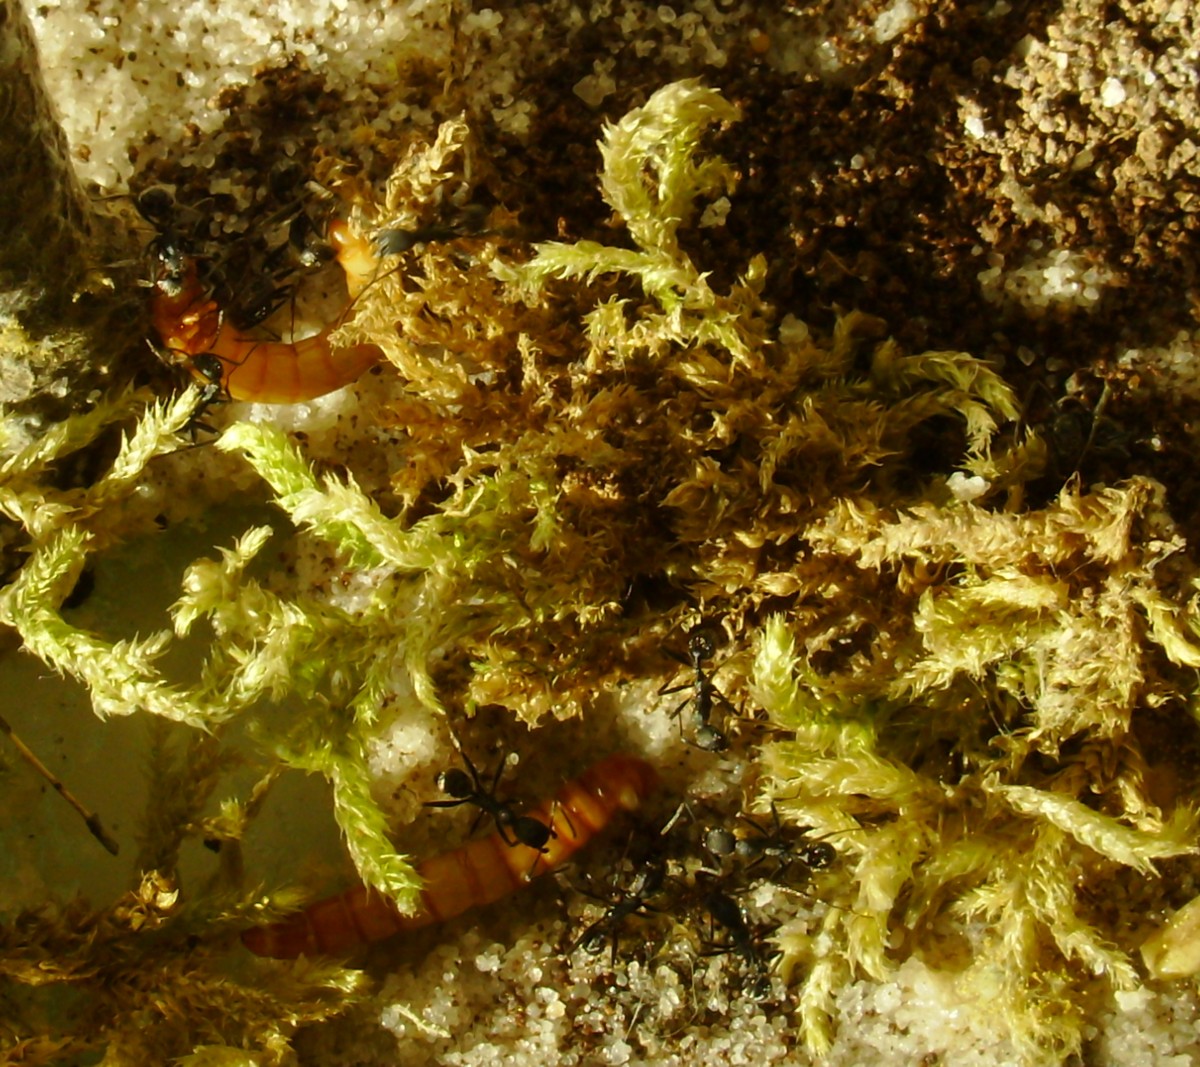 Aphaenogaster senilis